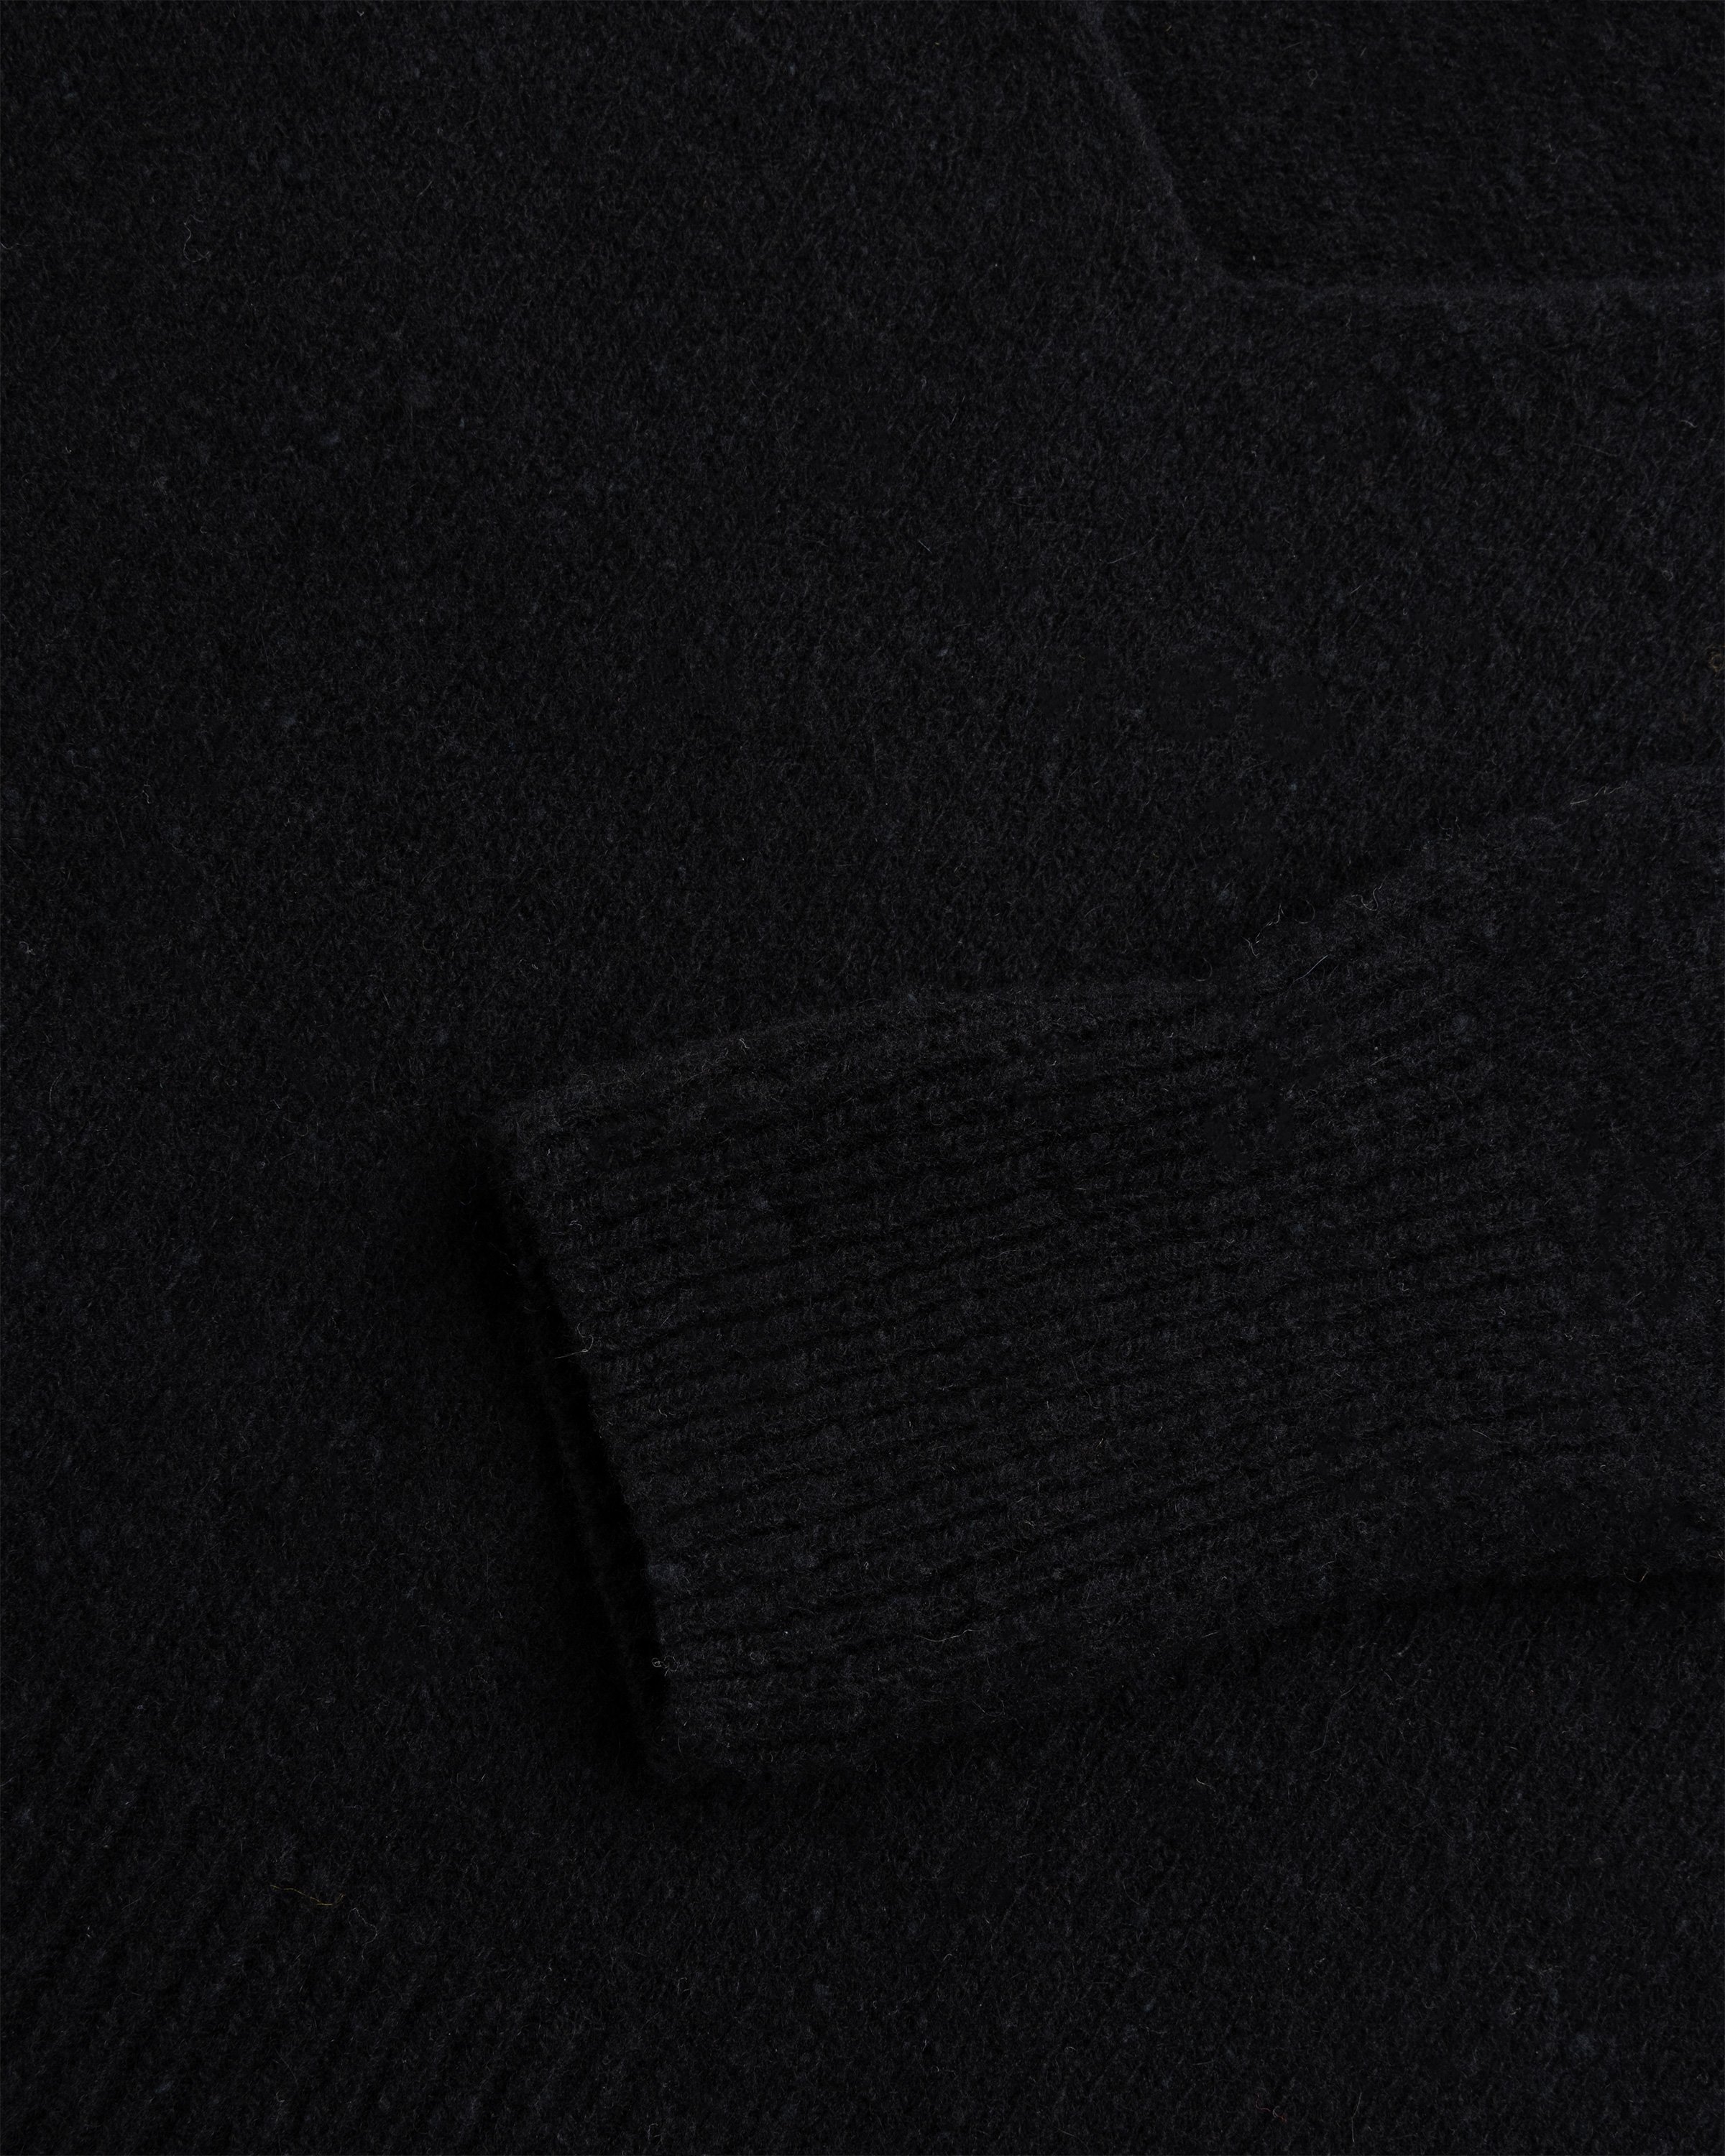 Dries van Noten - Meron Knit Black - Clothing - Black - Image 5